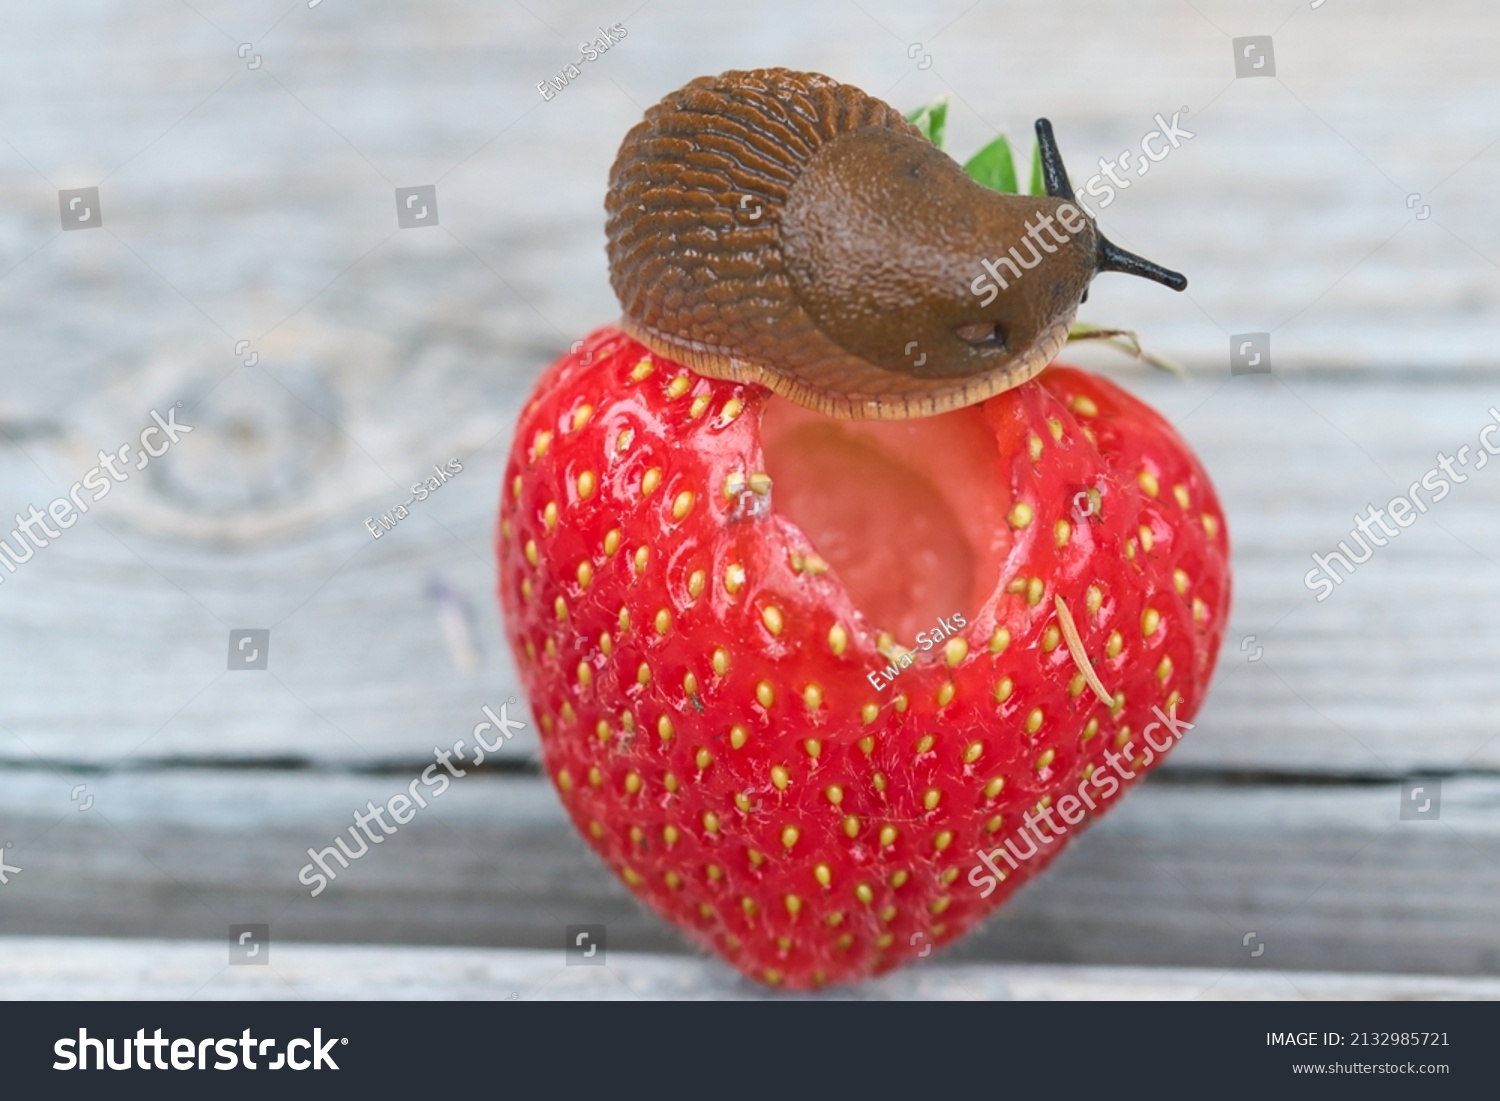 Spanish slug isolated close up, on top of the strawberry fruit, feeding, garden pests concept	 #2132985721